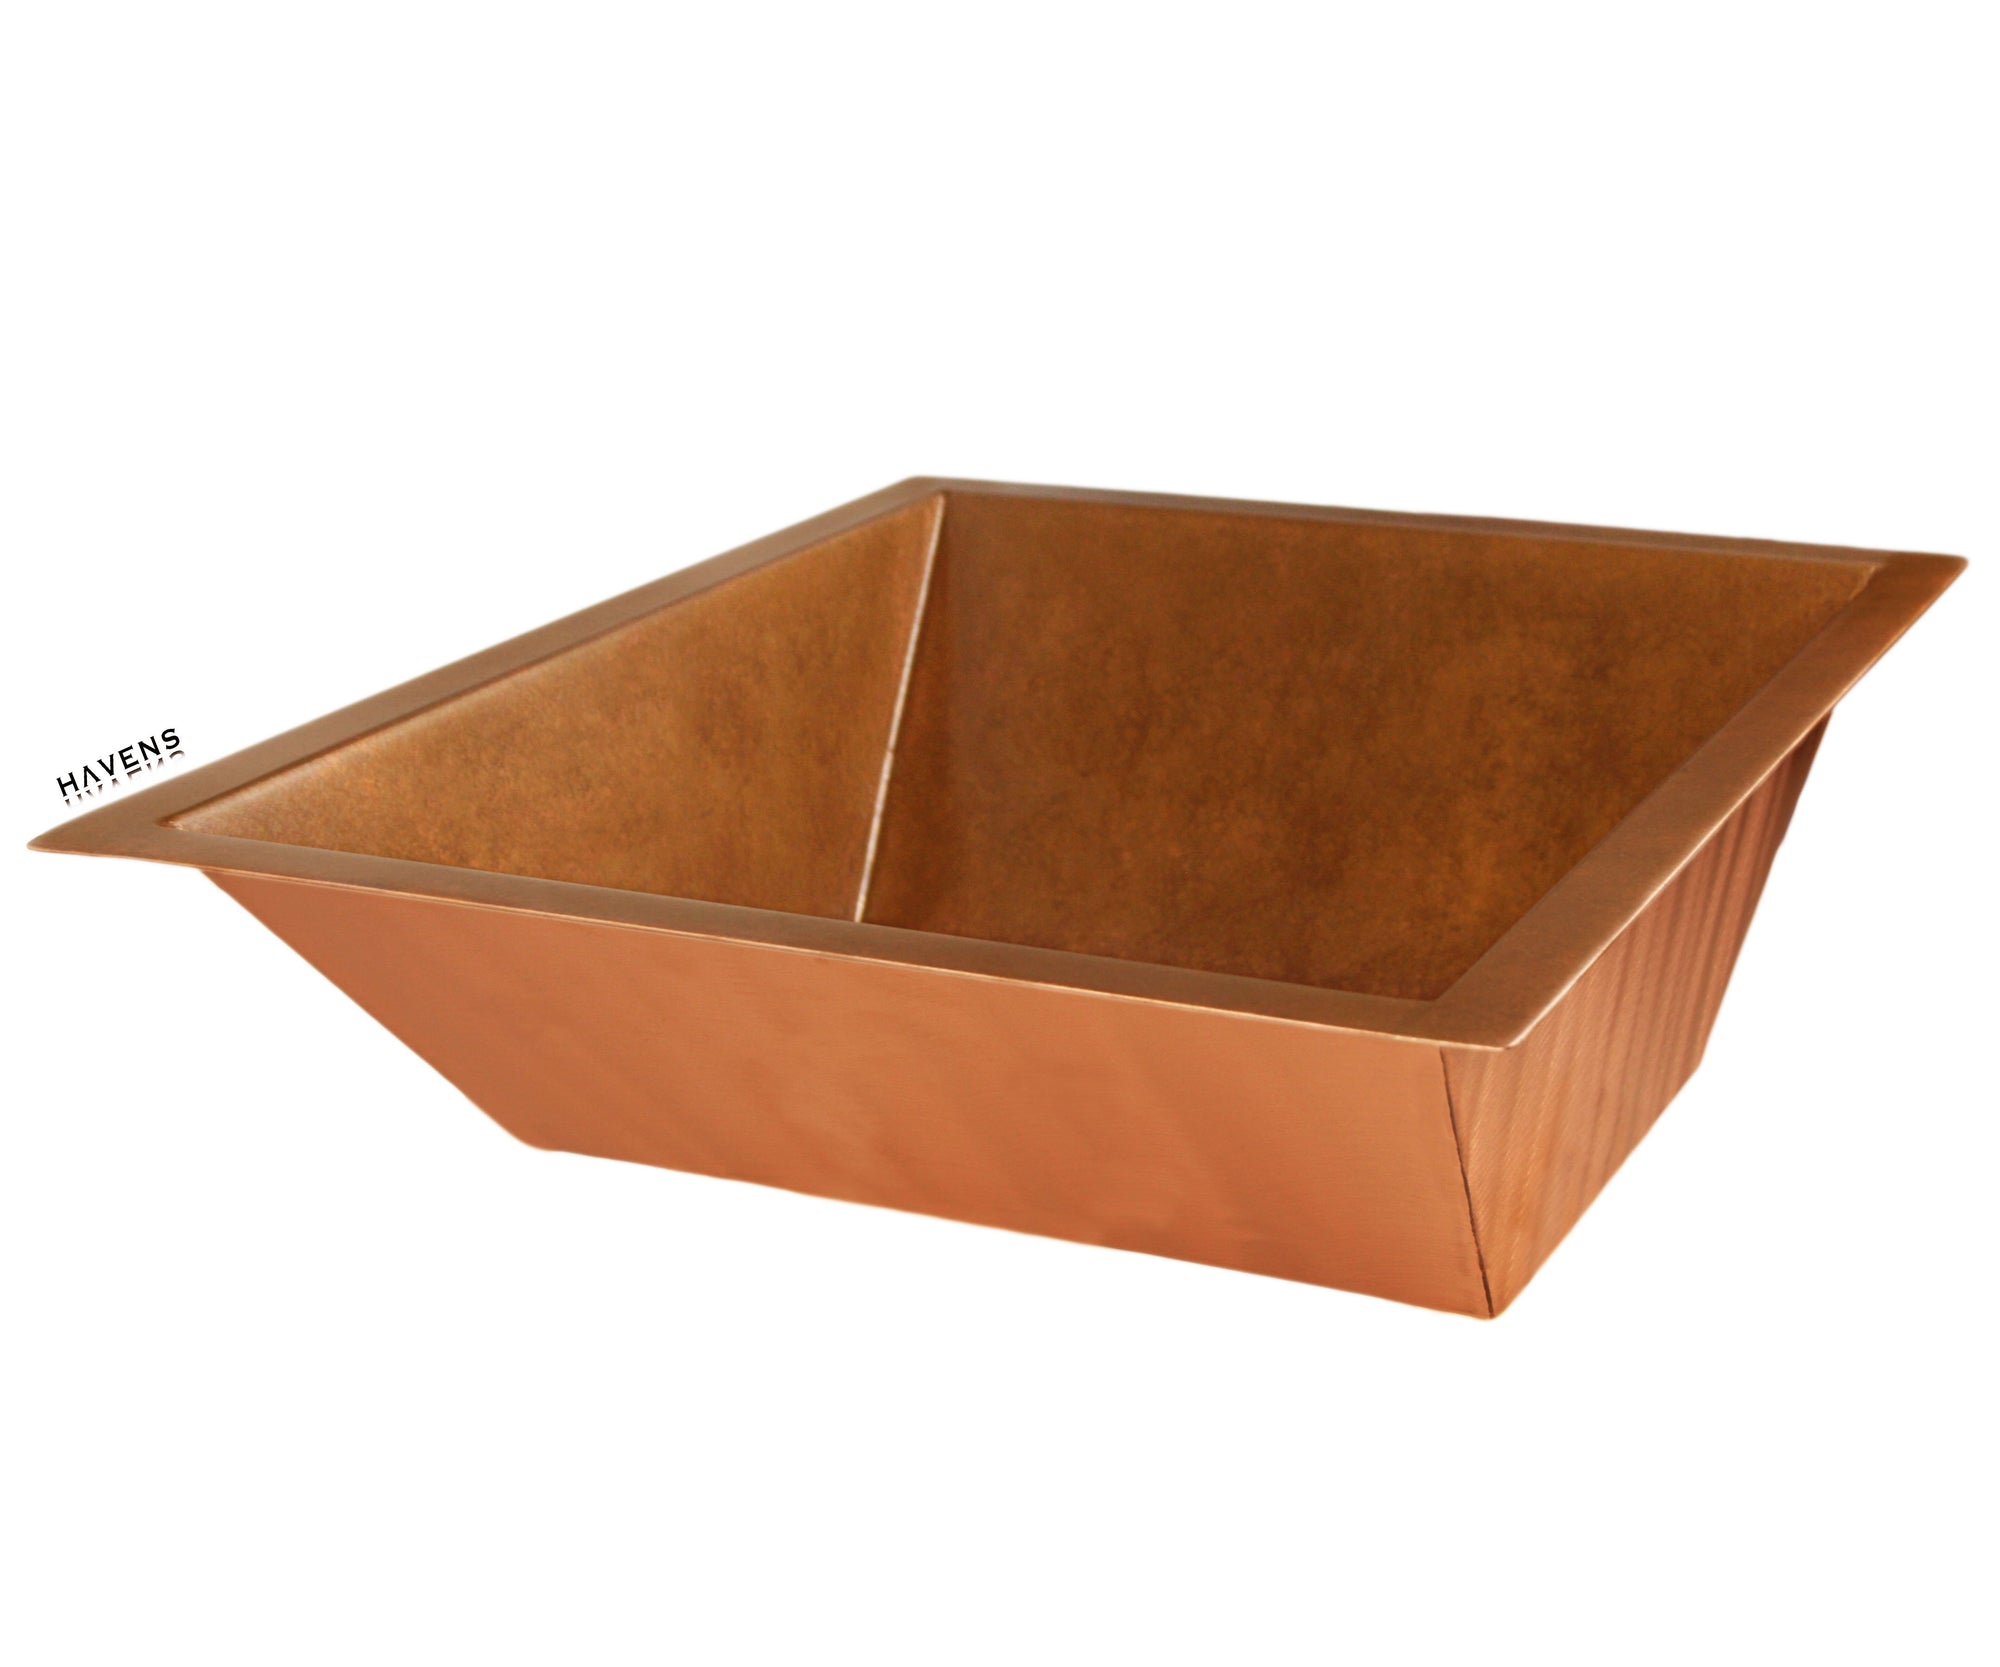 Custom Cavo Sink - Copper